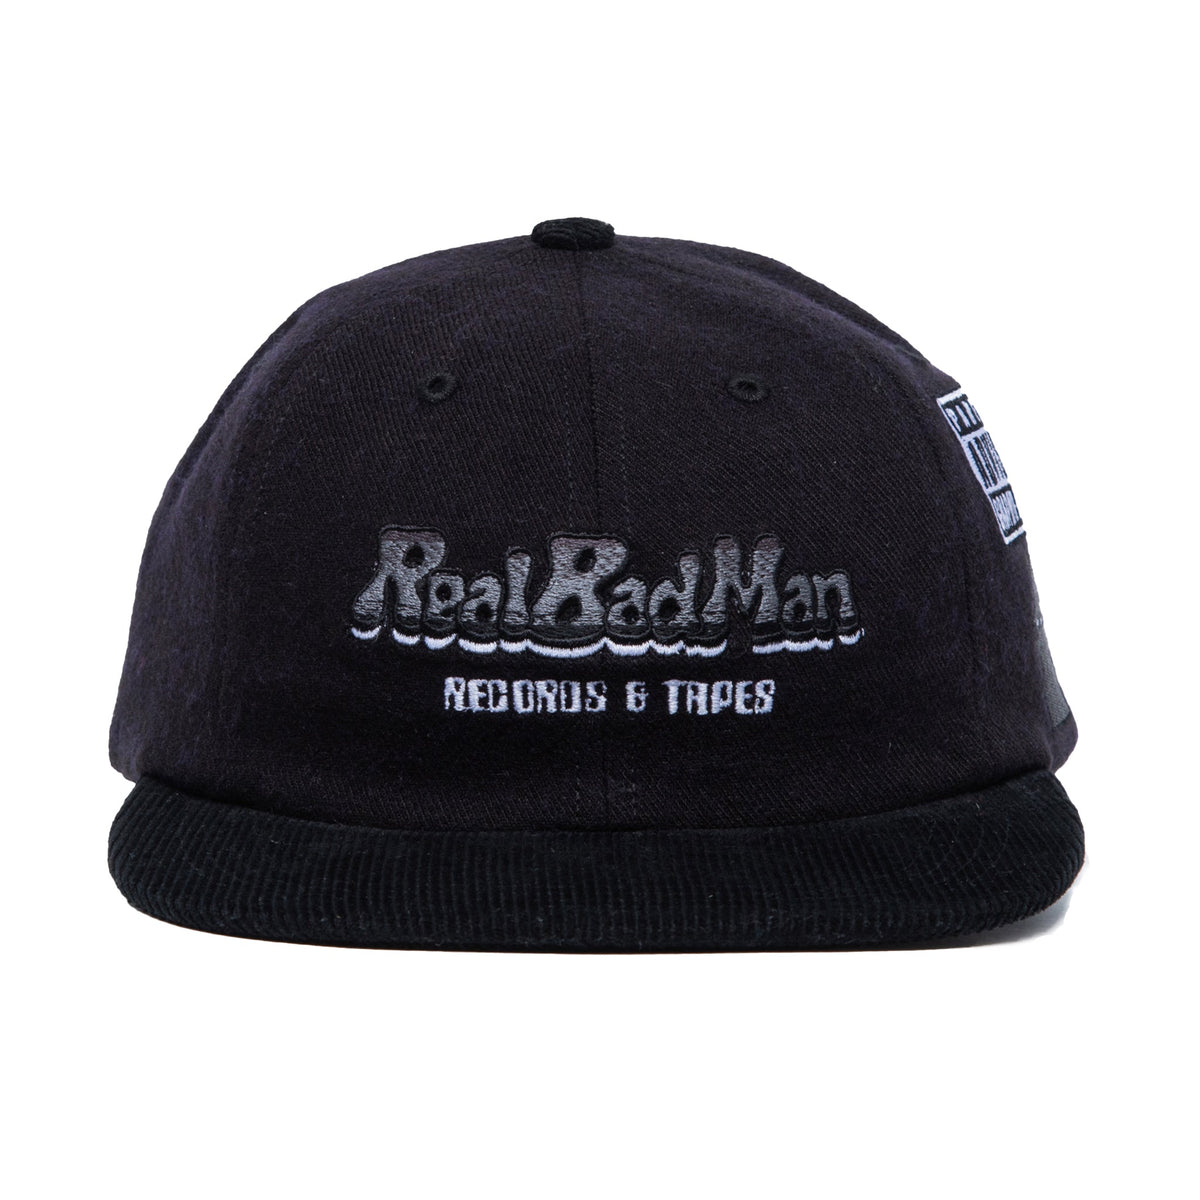 REAL BAD MAN RECORDS & TAPES 6 PANEL CAP